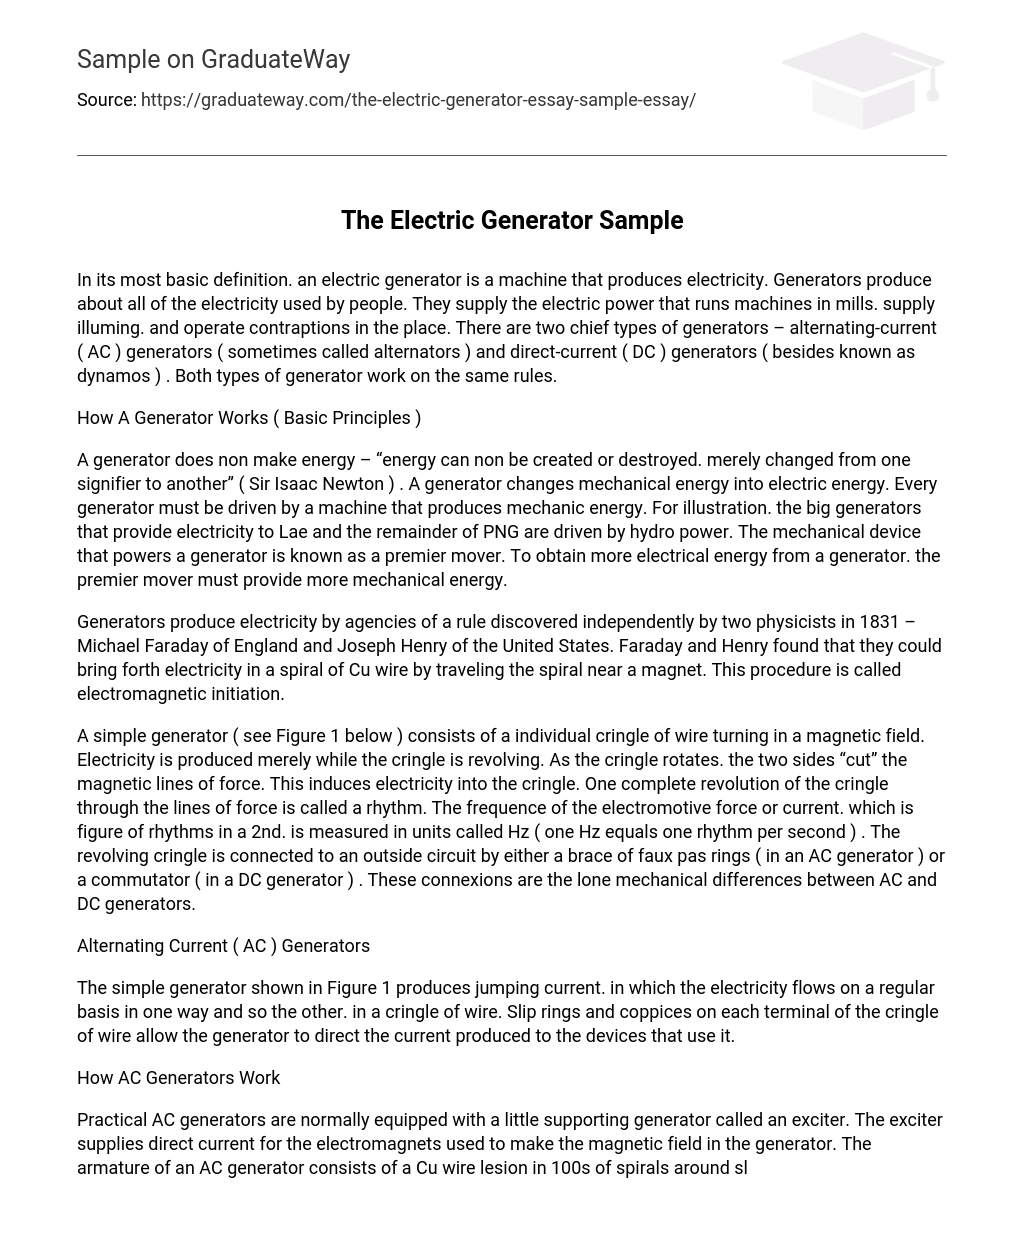 The Electric Generator Sample